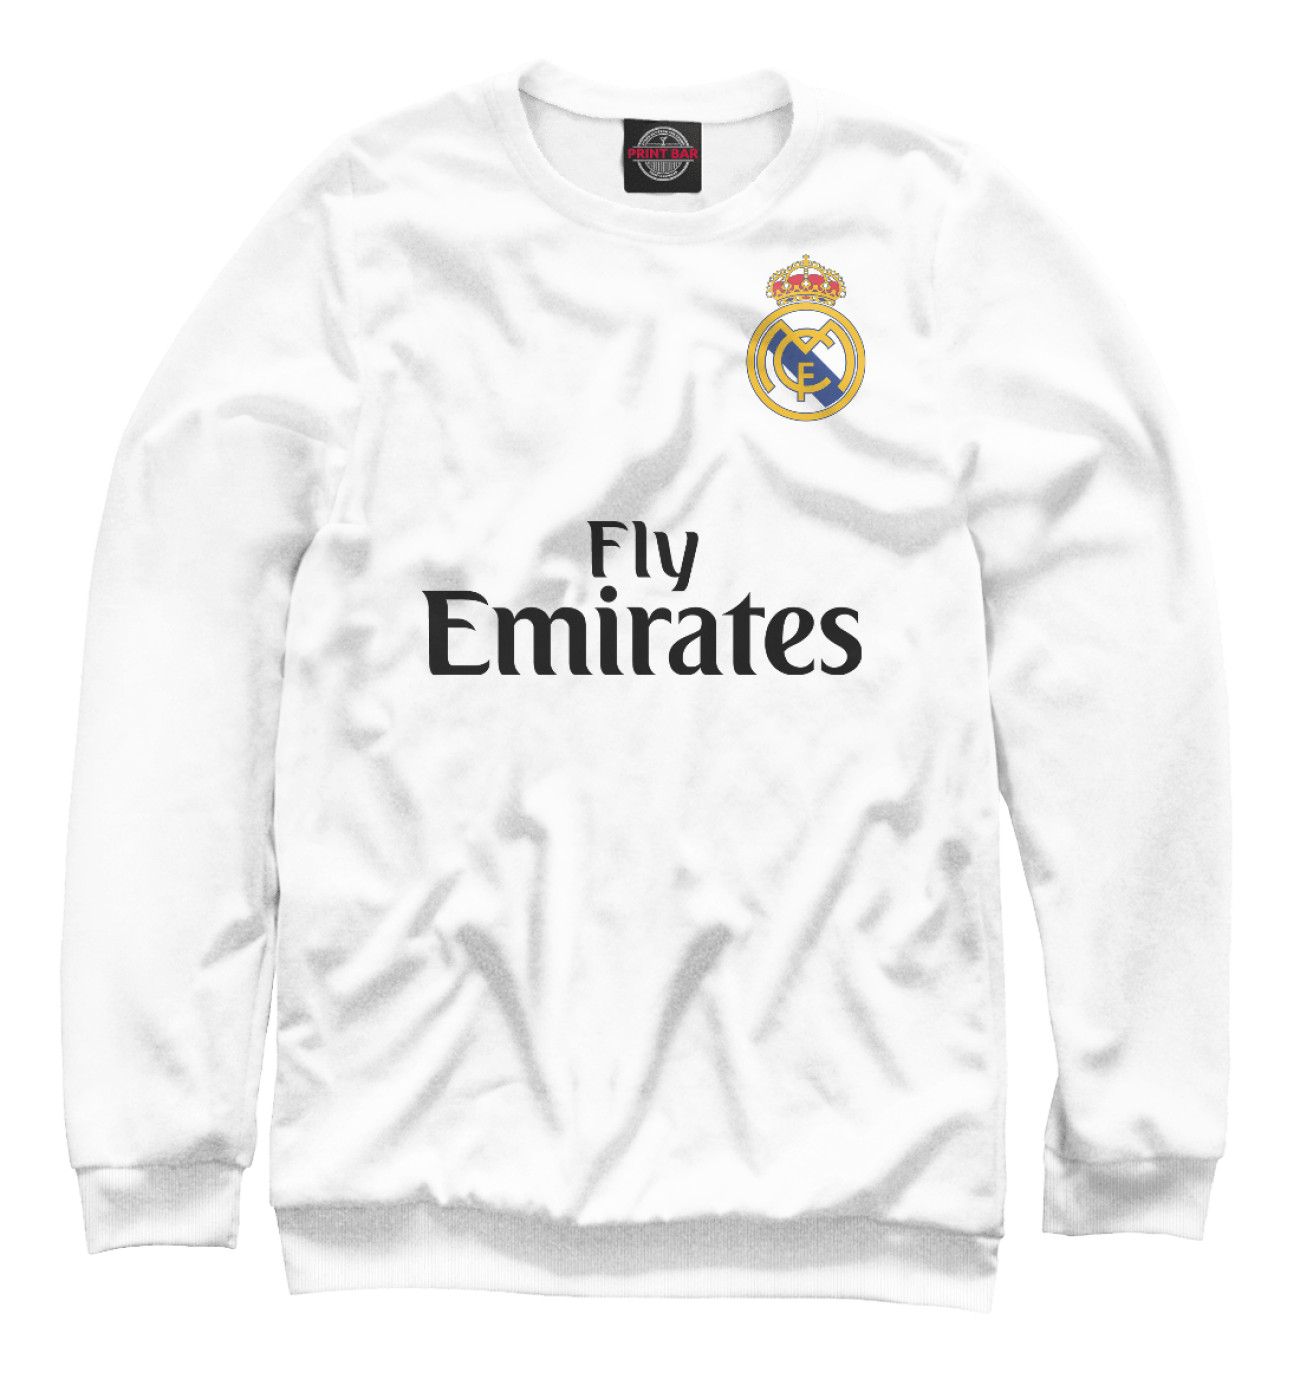 Мужской Свитшот Форма Реал Мадрид, артикул: REA-876584-swi-2